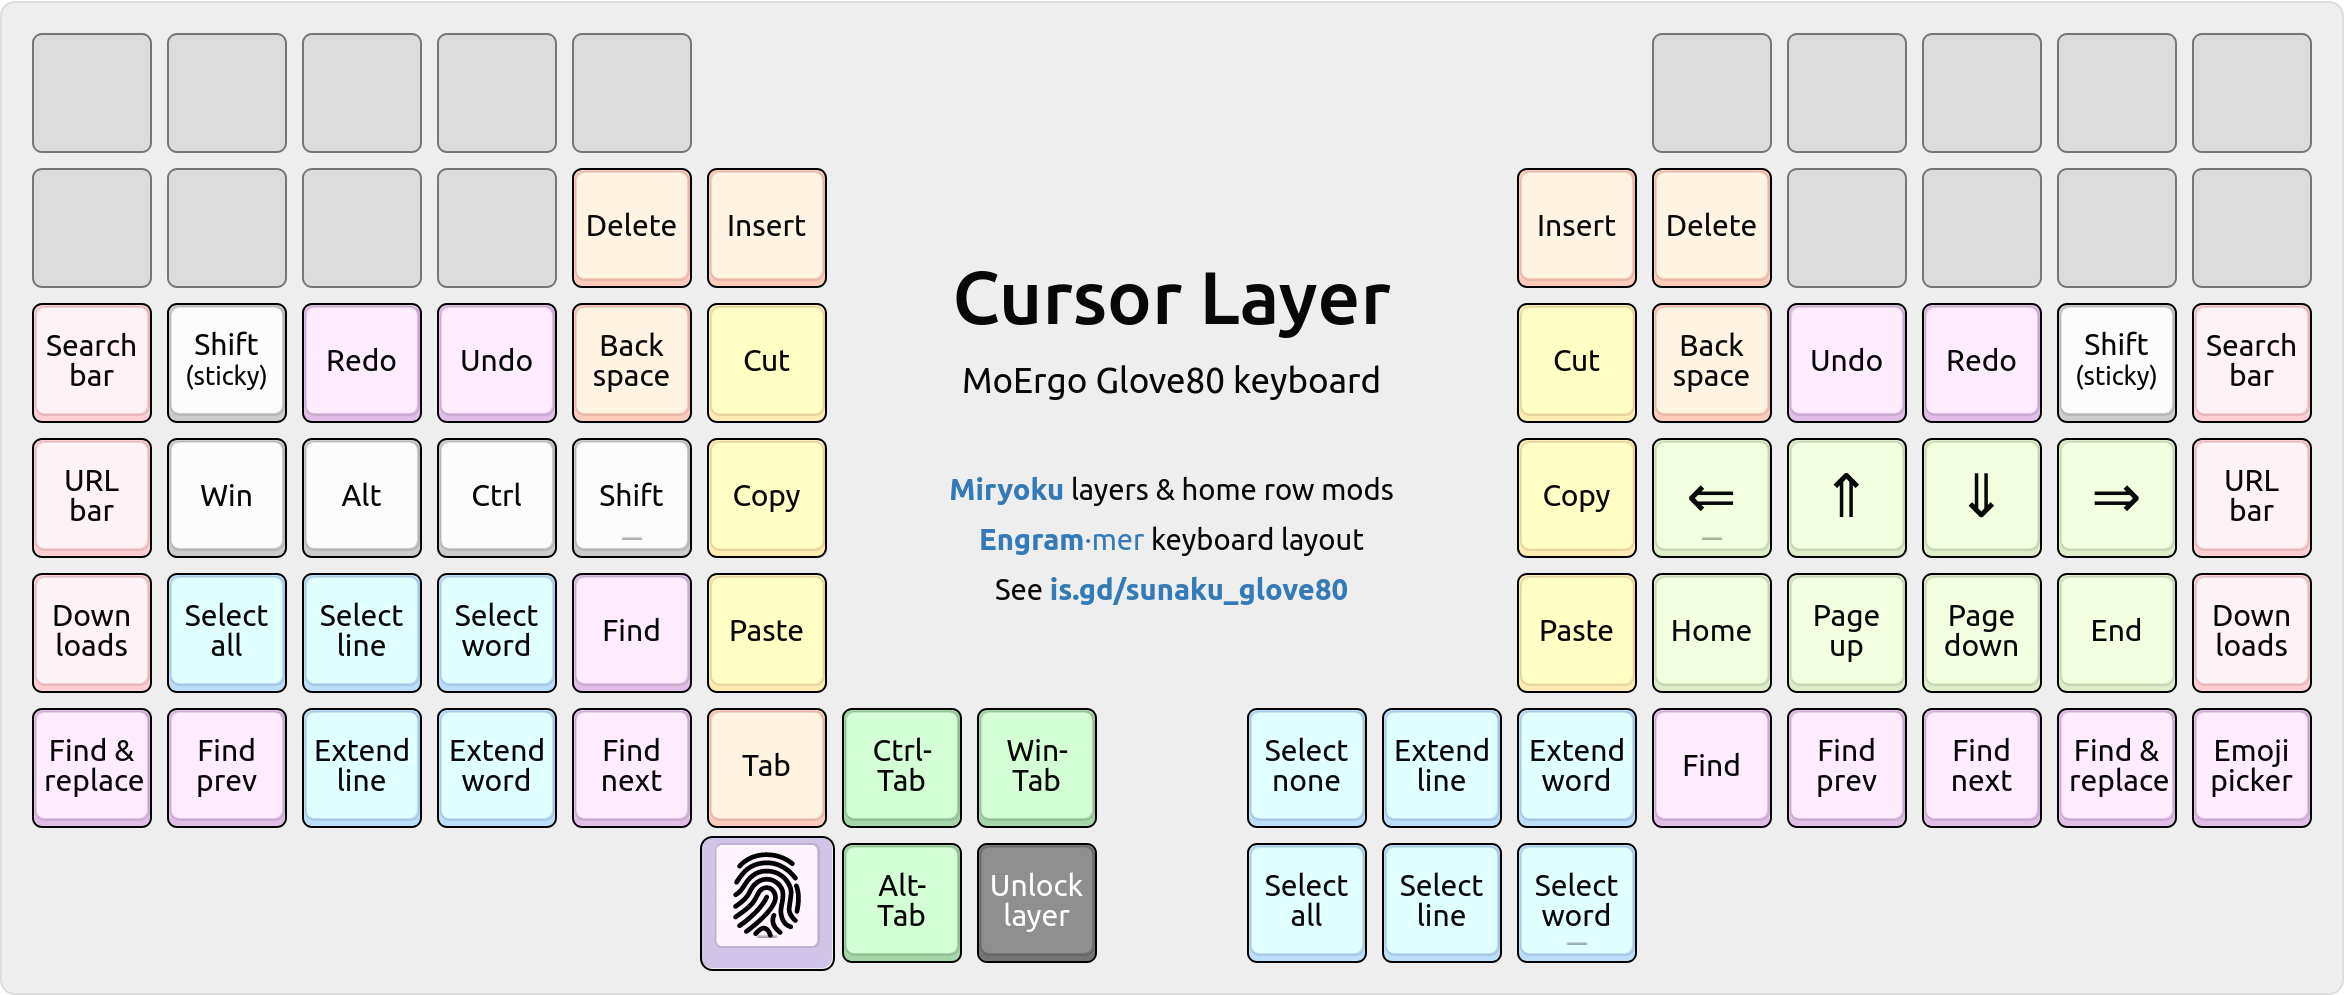 Cursor layer